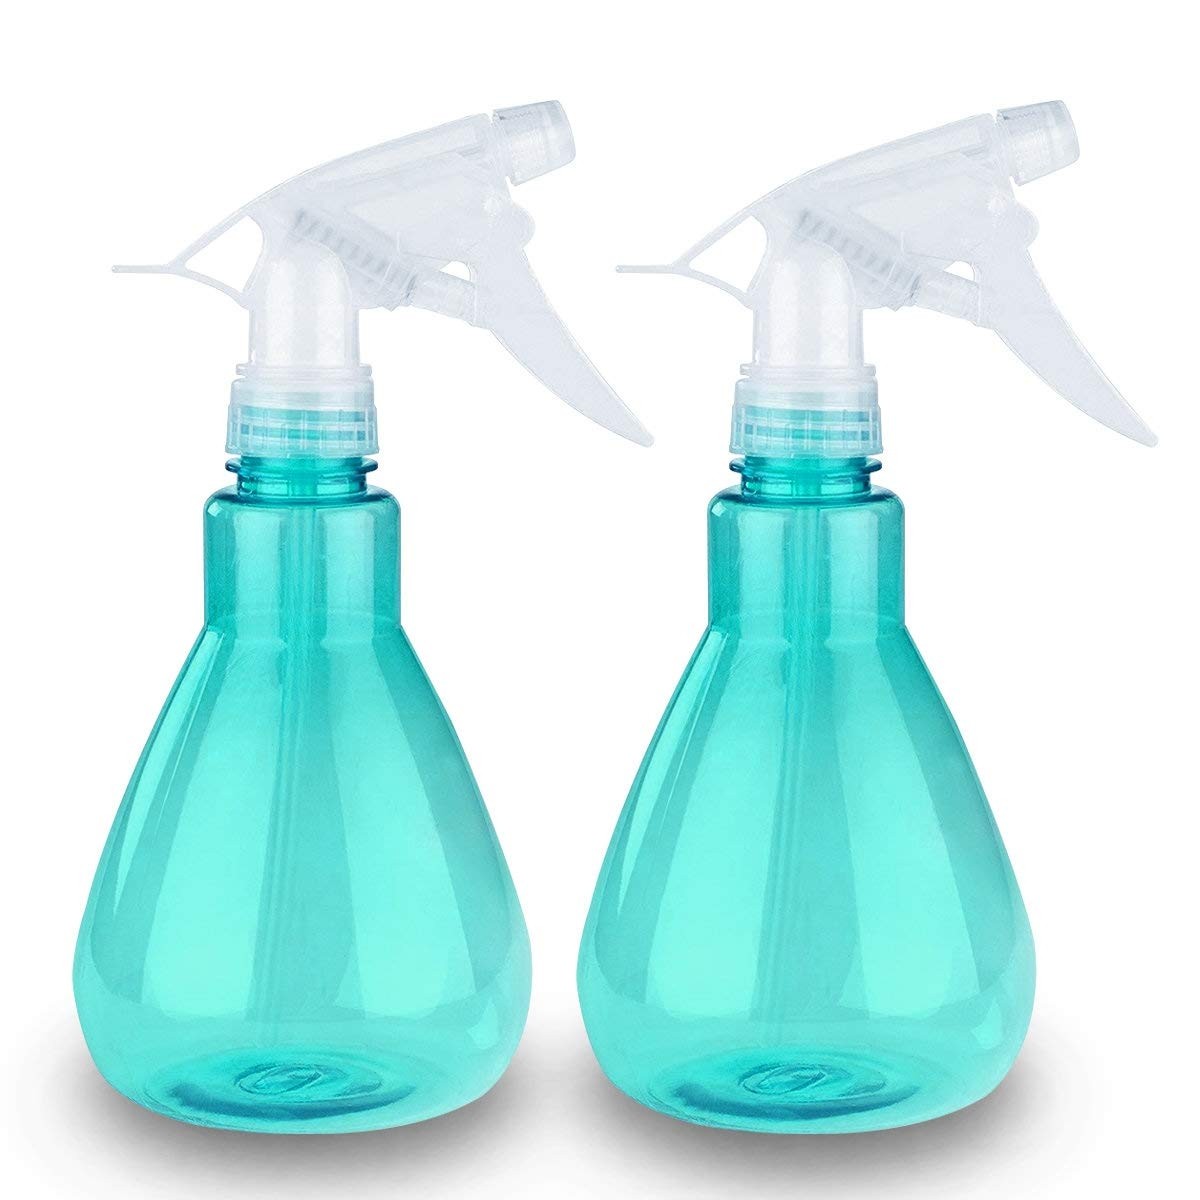 Pro Spray Adjustable Mist Spray Bottles